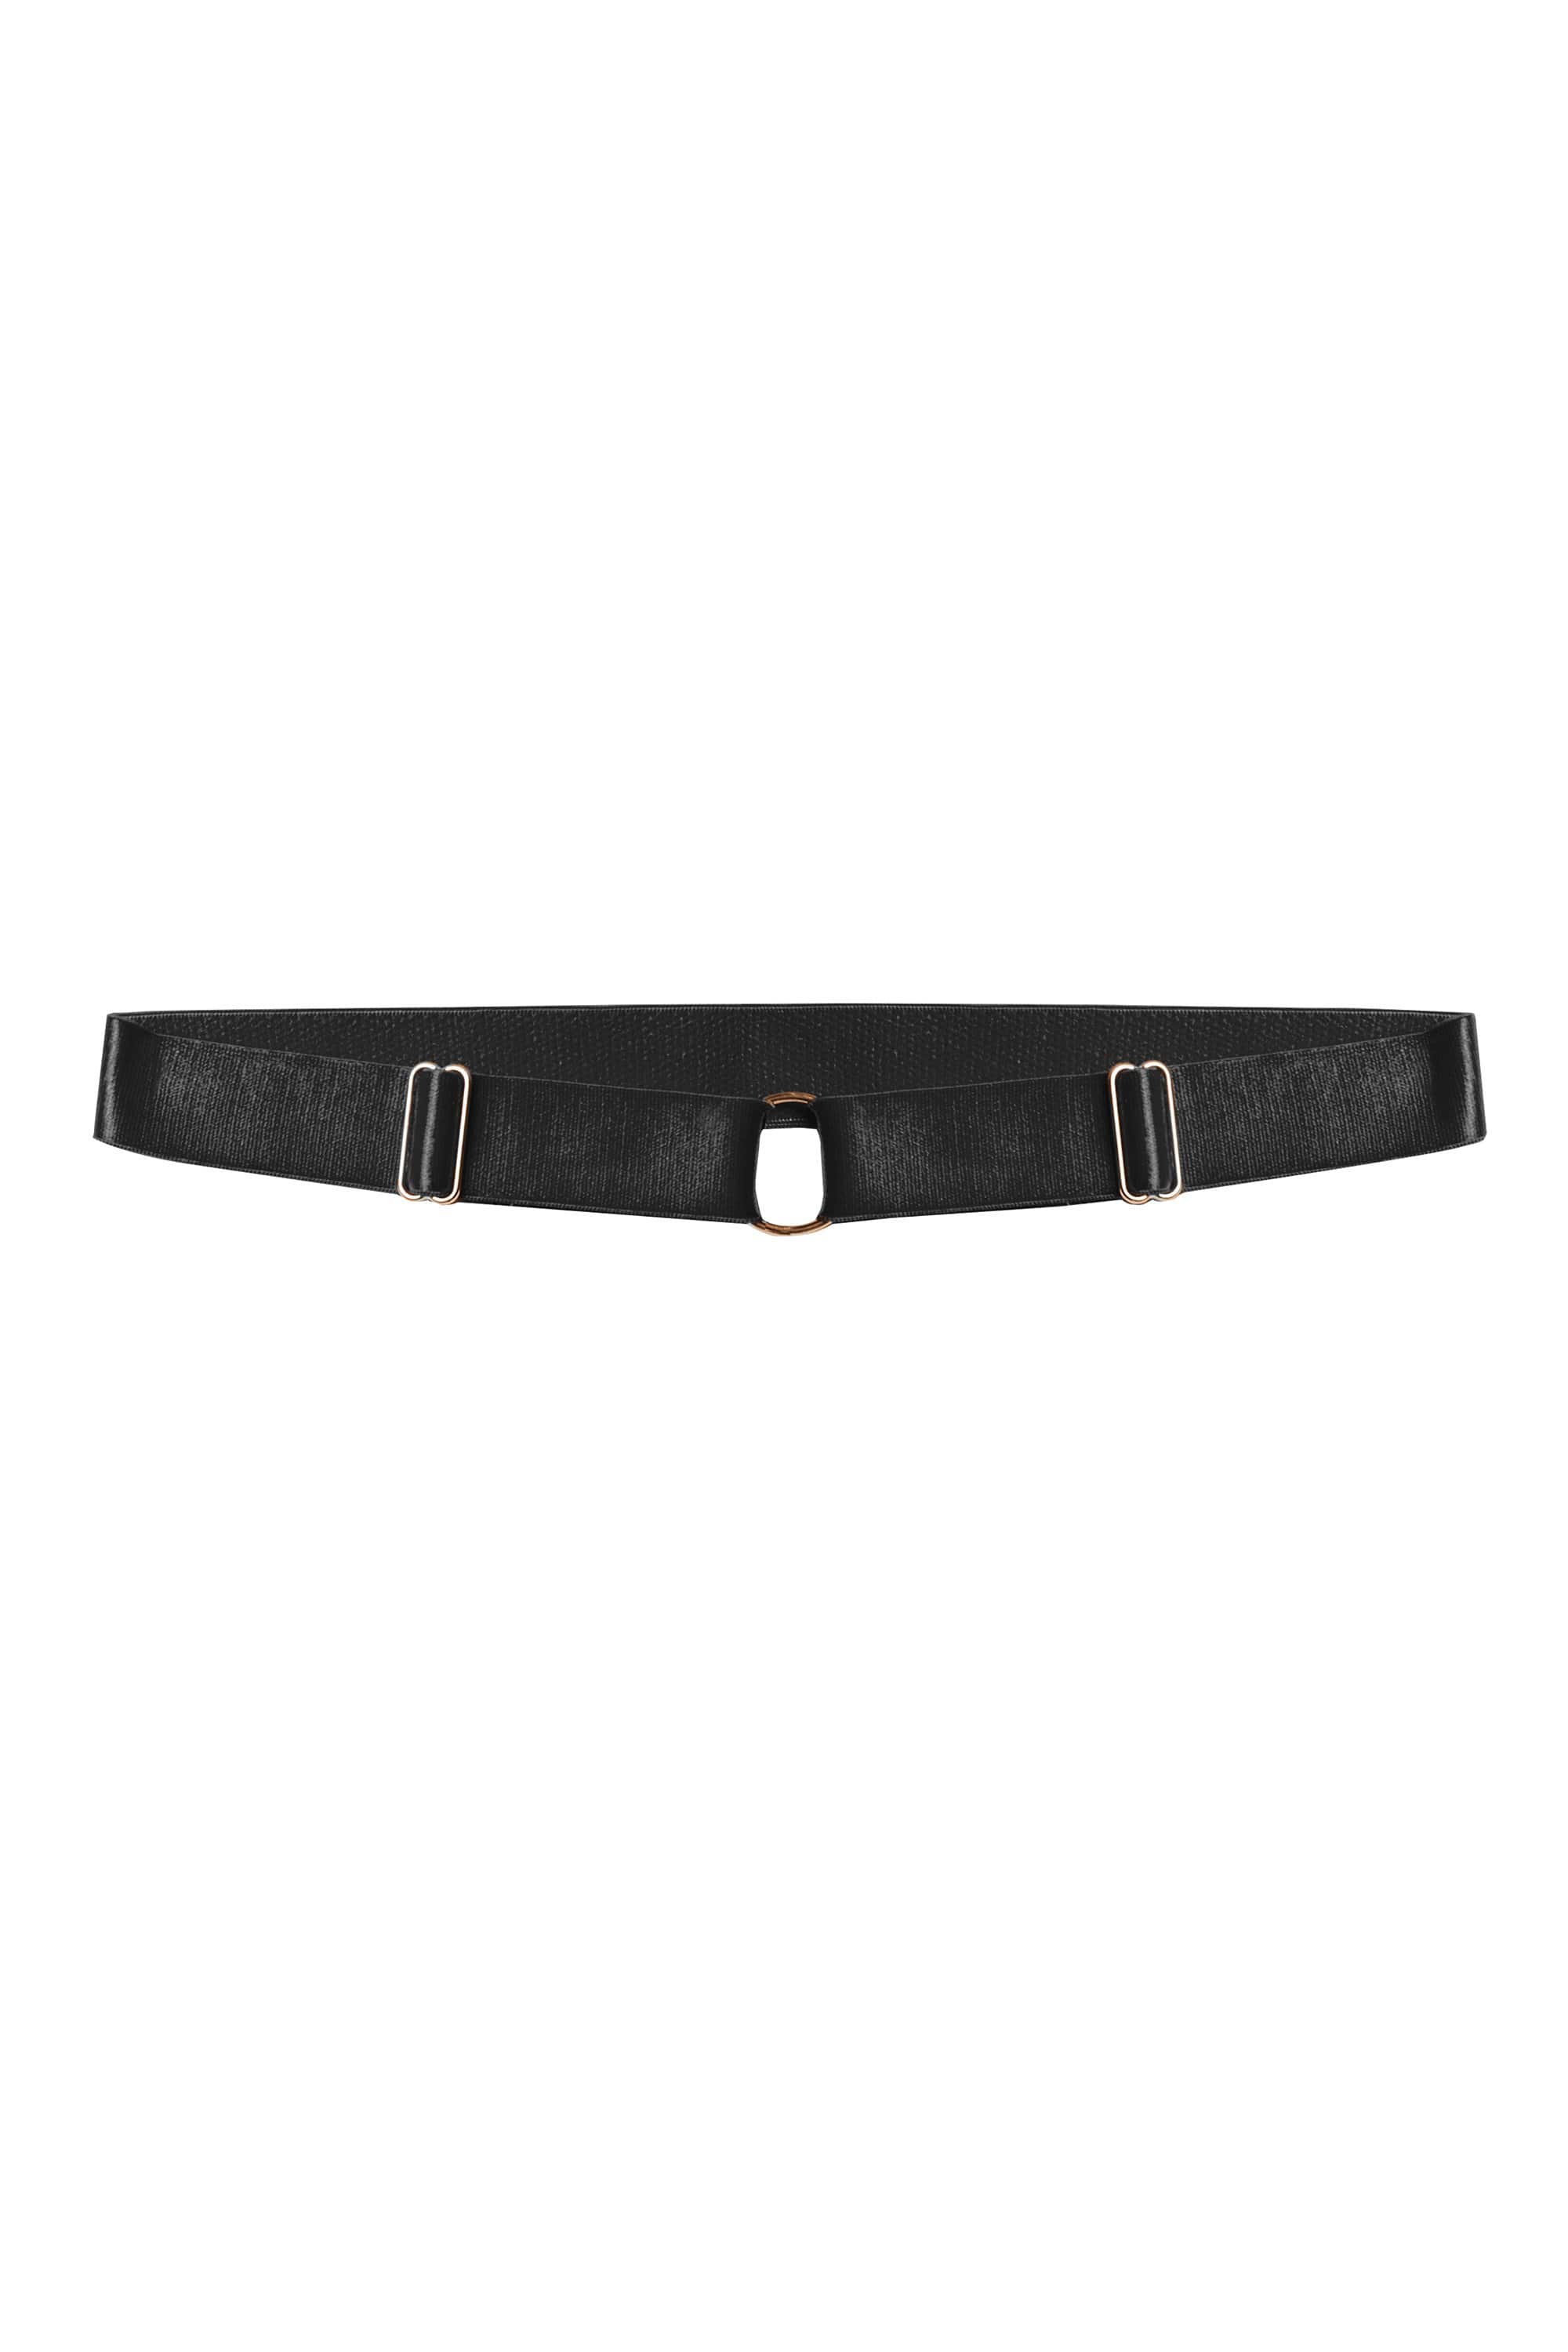 Kestosque Black Suspender / Garters